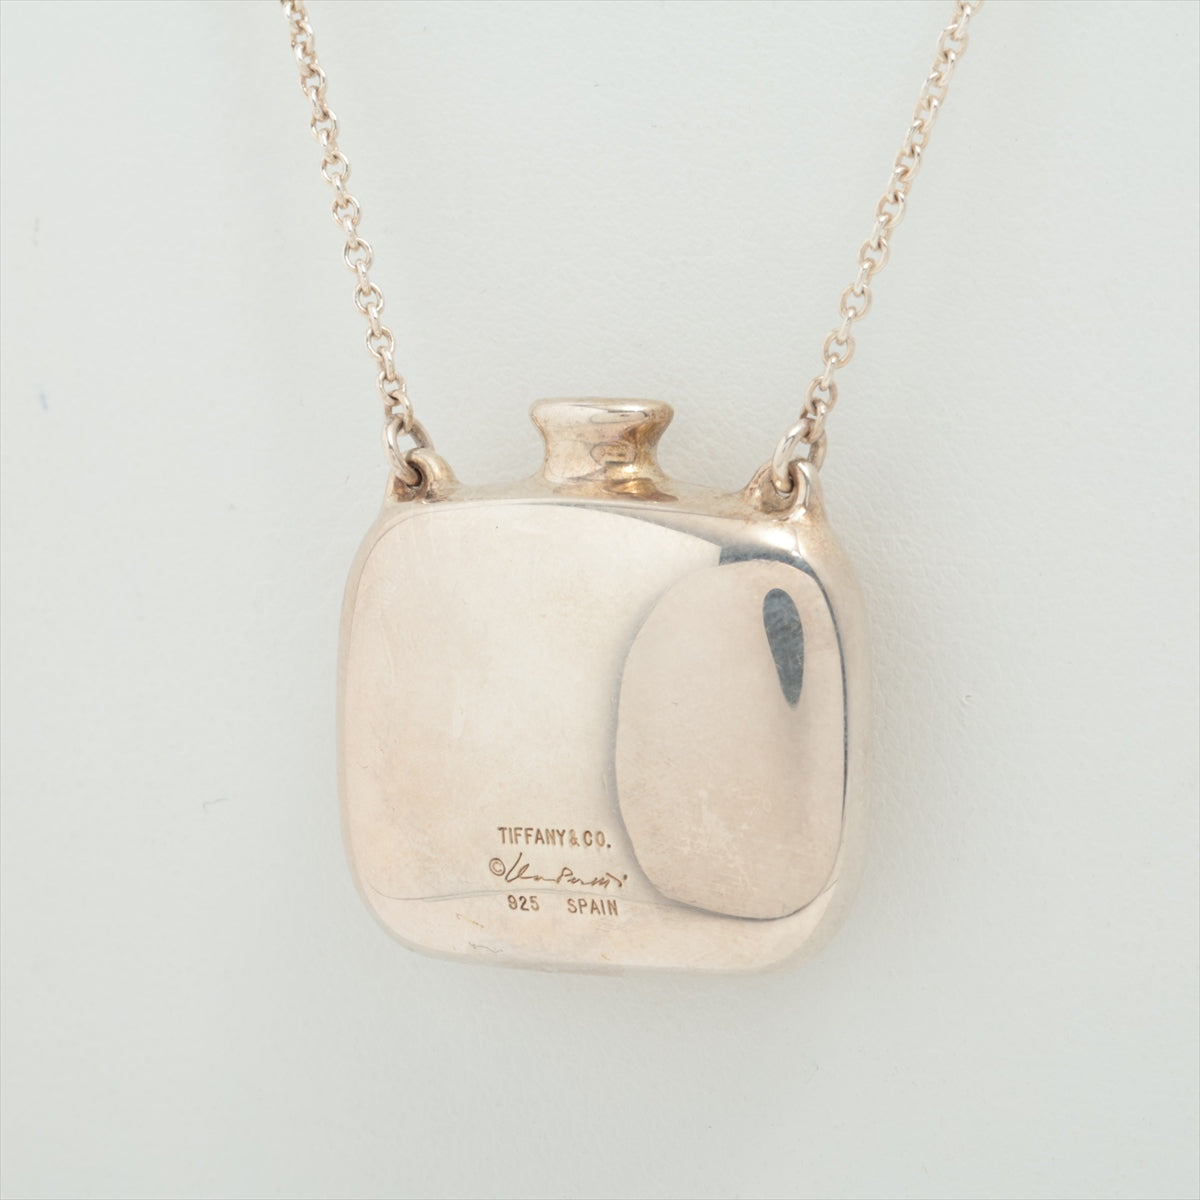 Tiffany Bottle Necklace 925 12.7g Silver